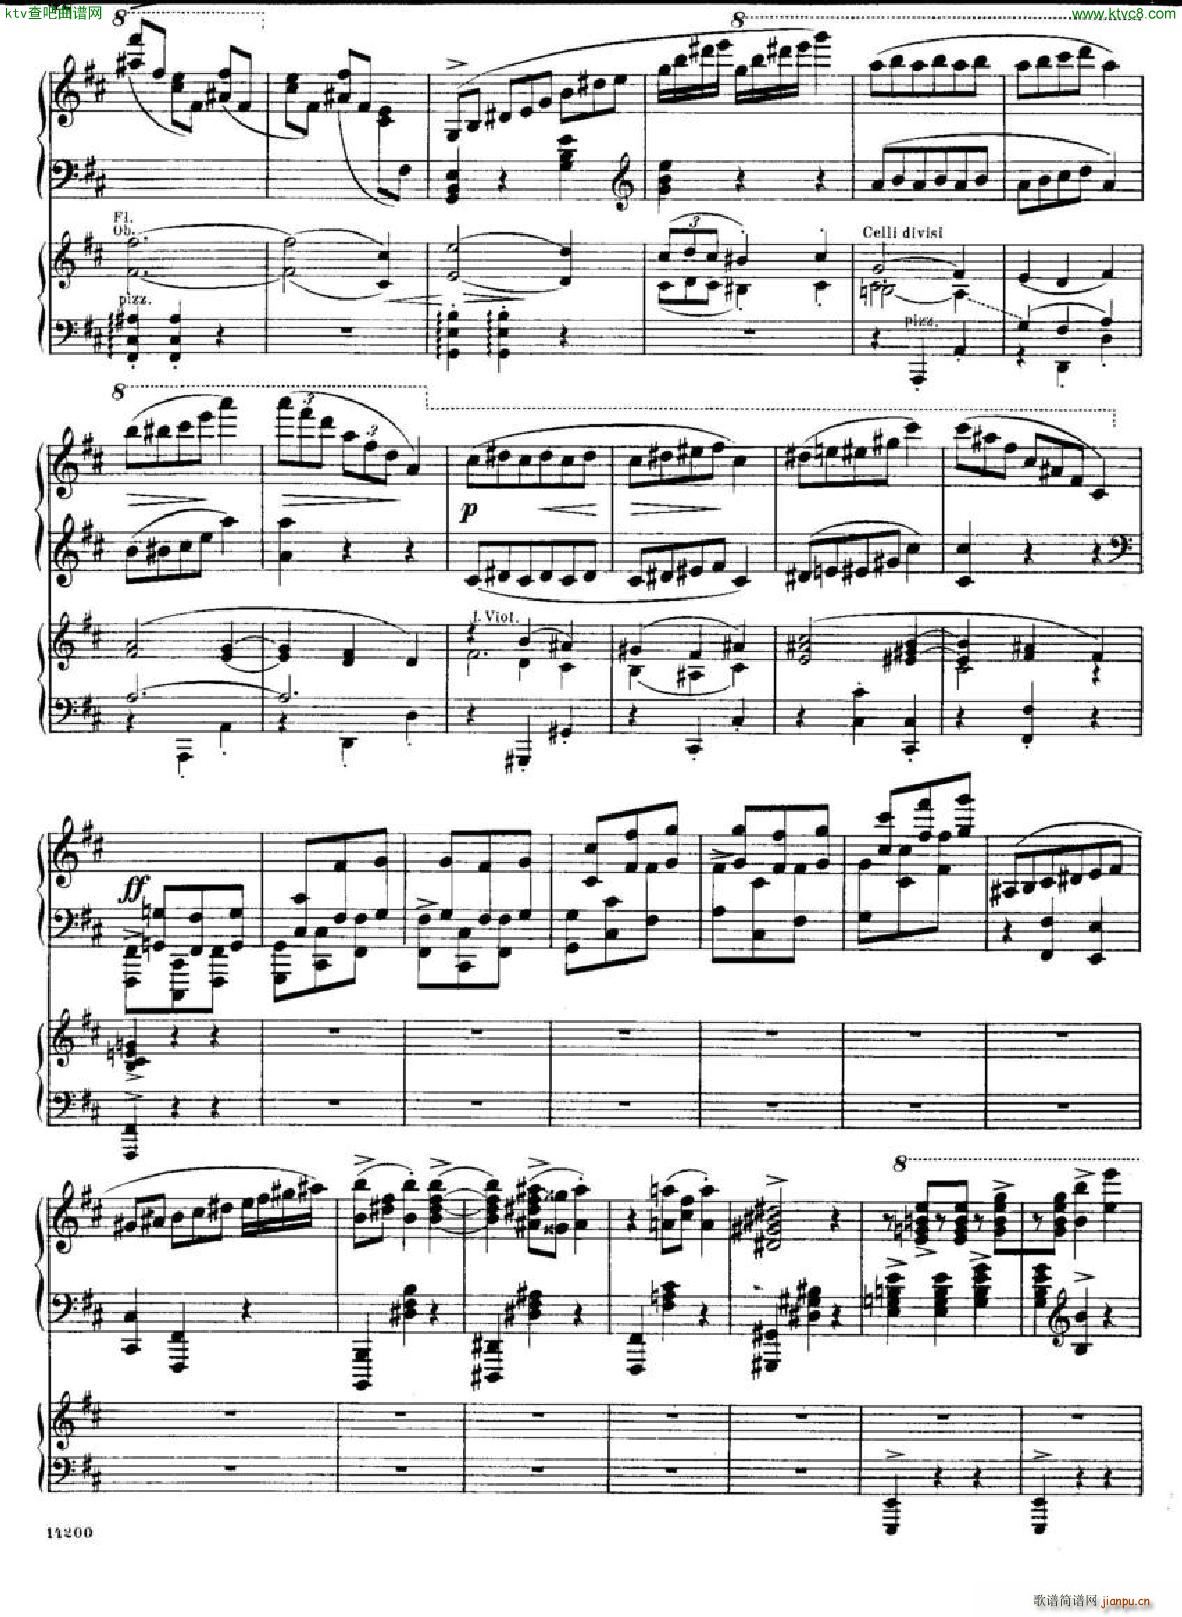 huss concerto part3()8